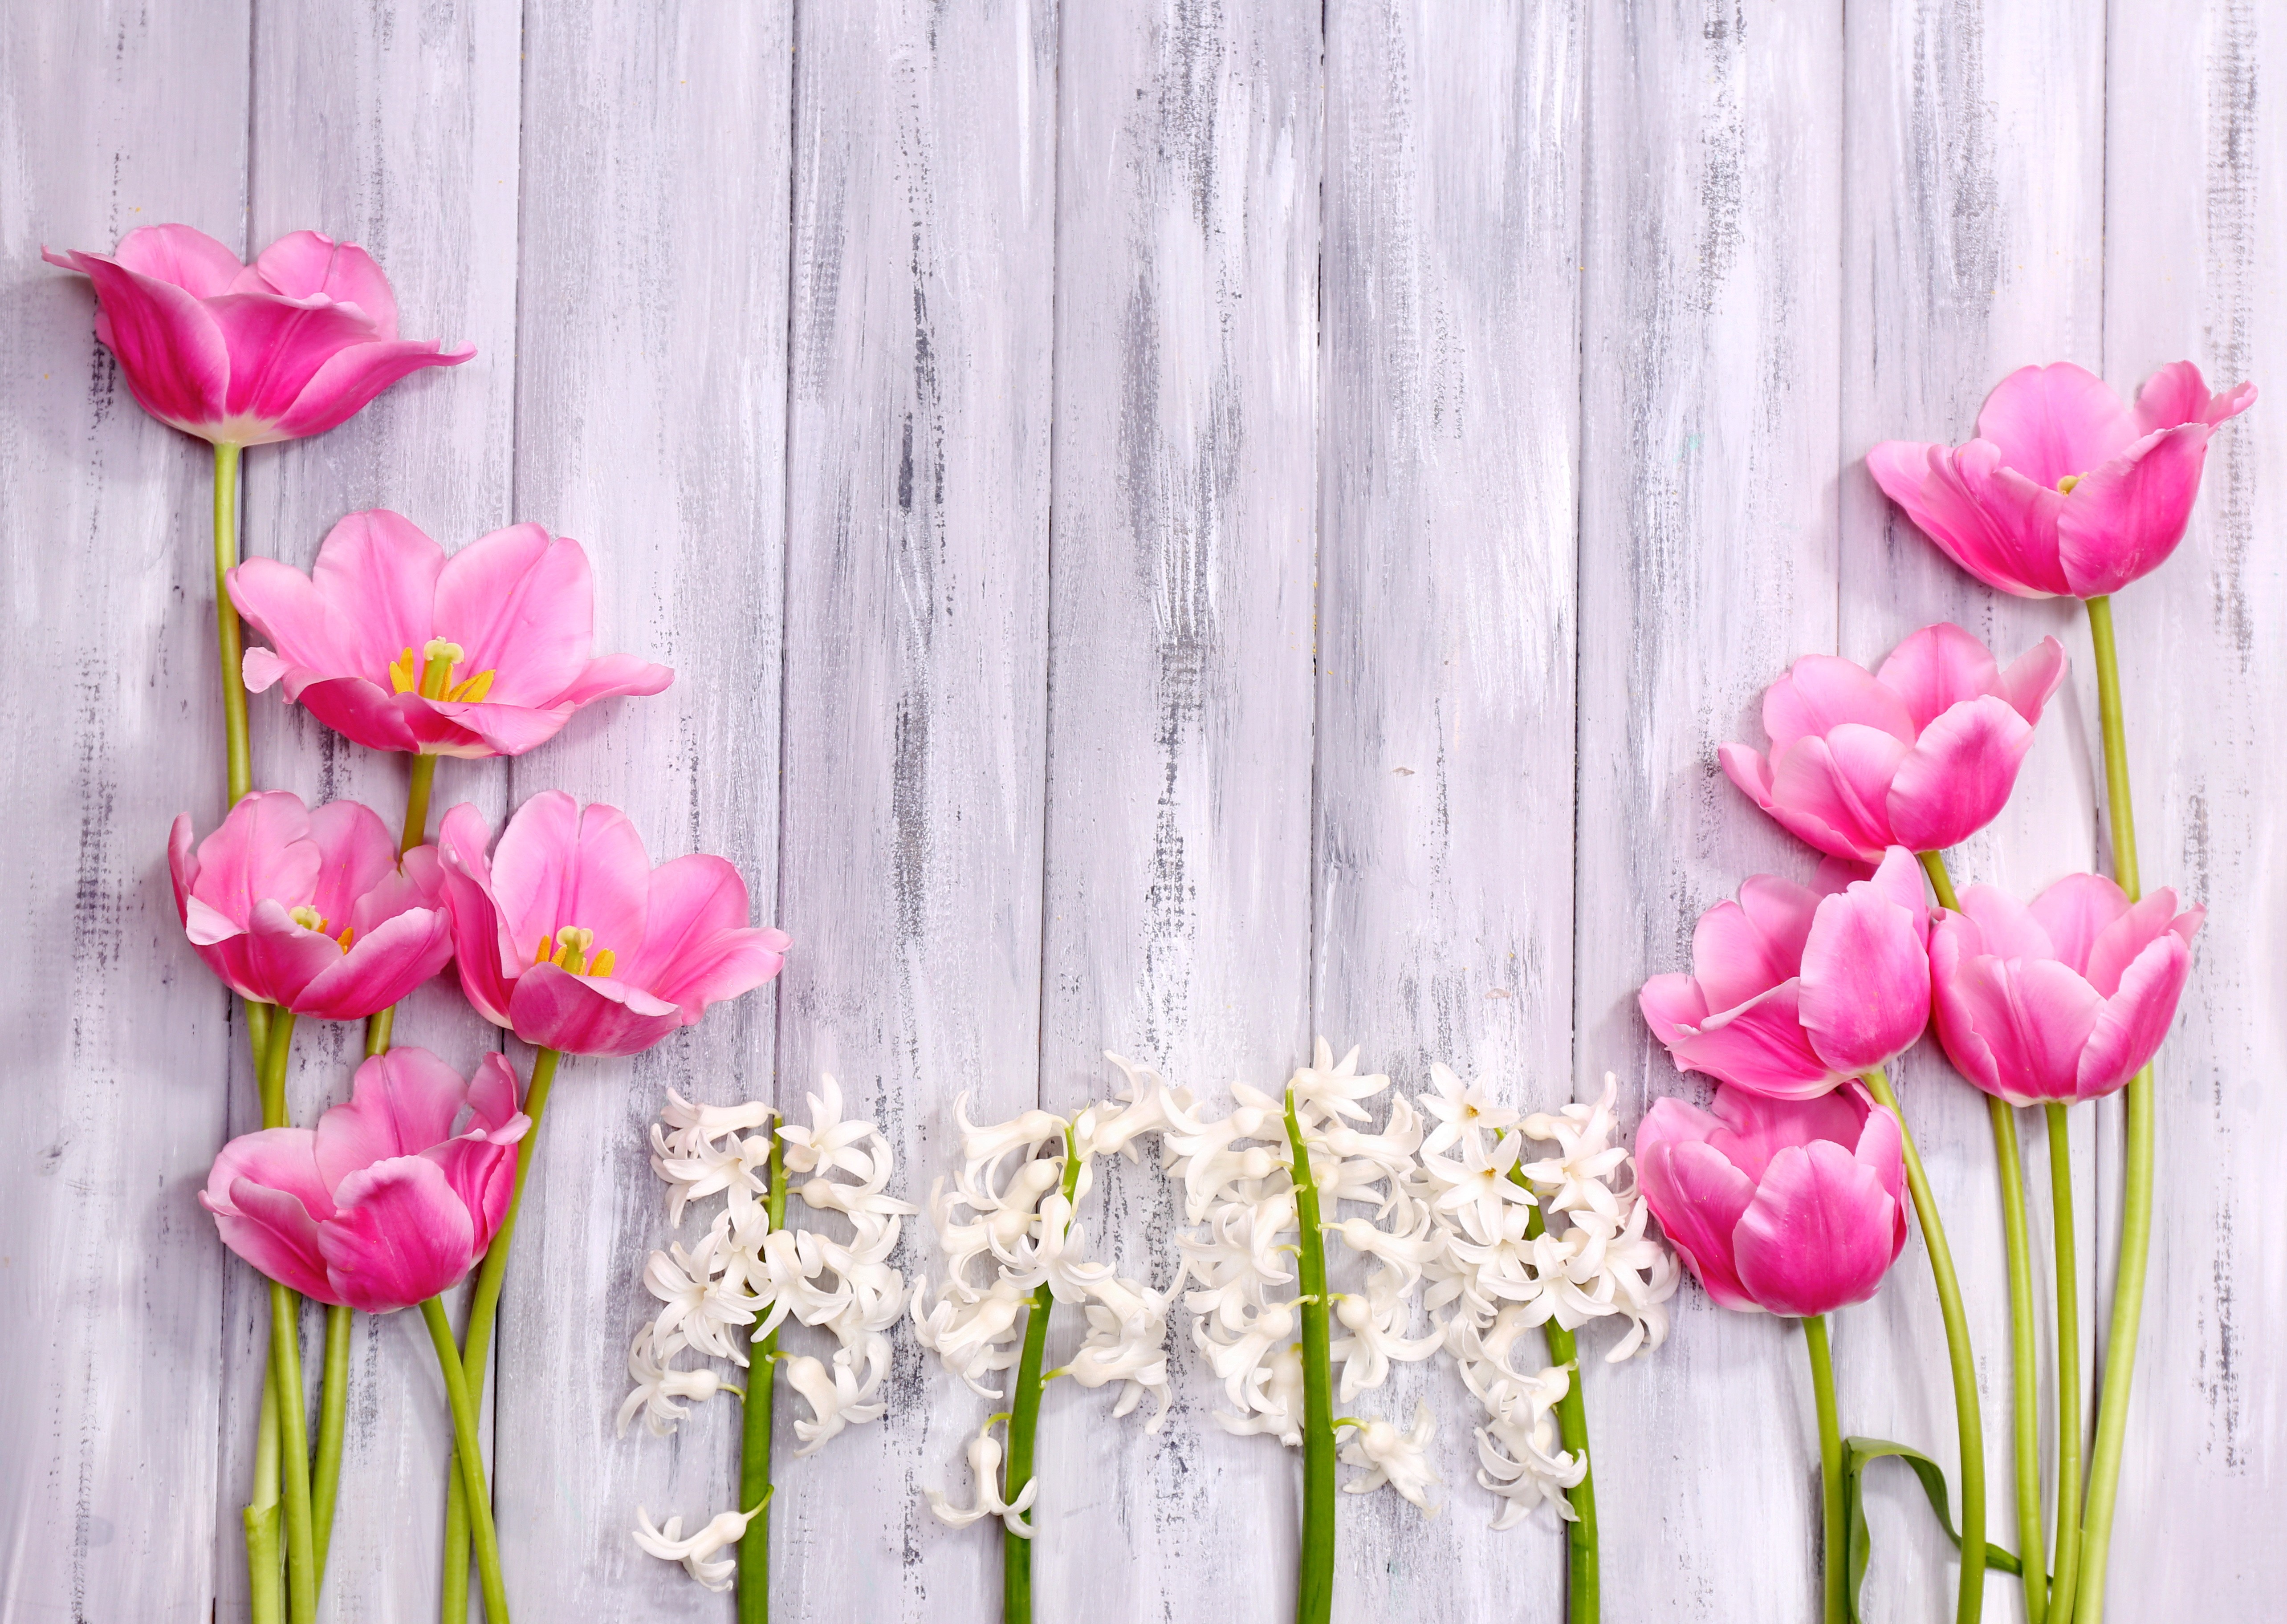 Flowers: Spring Flowers Hyacinth Wood Tulips Shutterstock Free ...